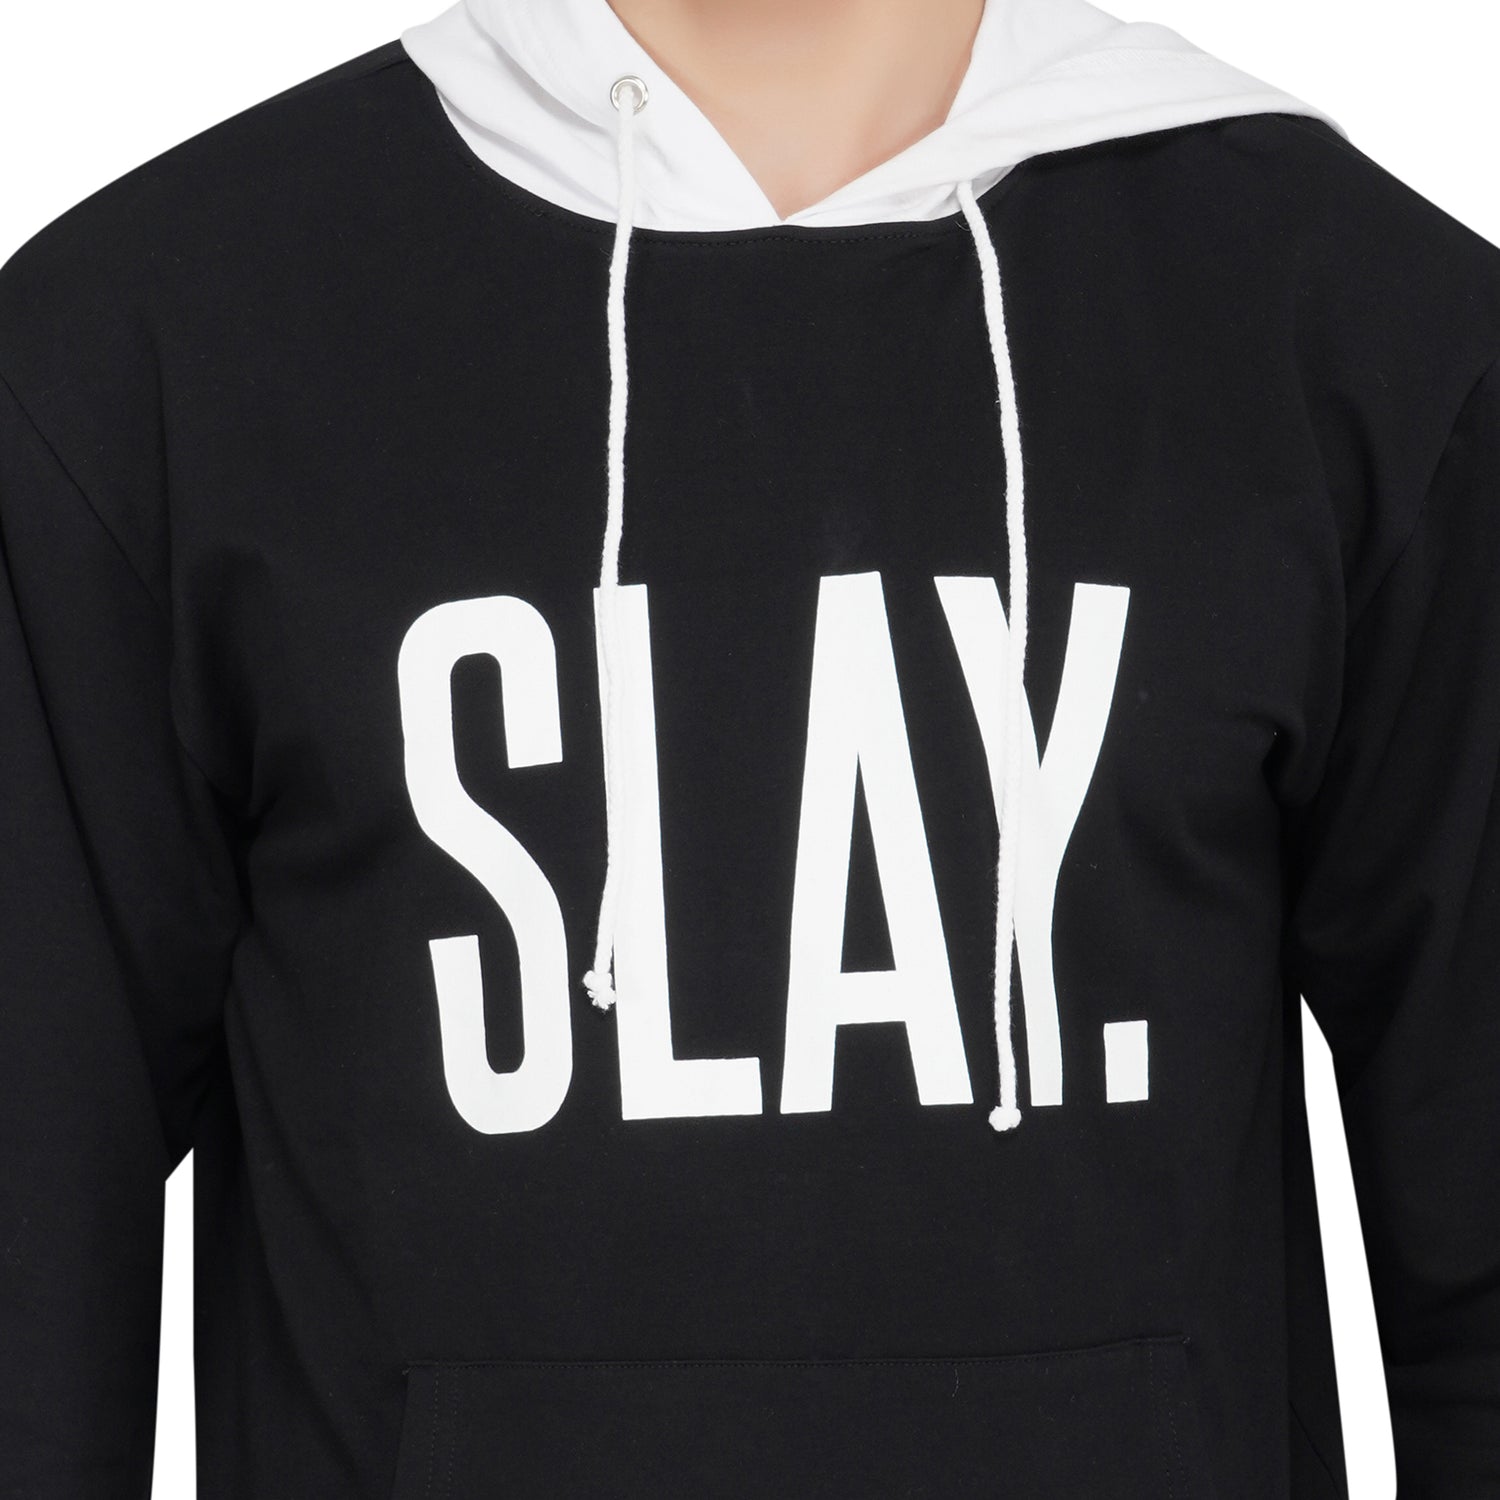 SLAY. Classic Men's Colorblock Black & White Tracksuit-clothing-to-slay.myshopify.com-Tracksuit